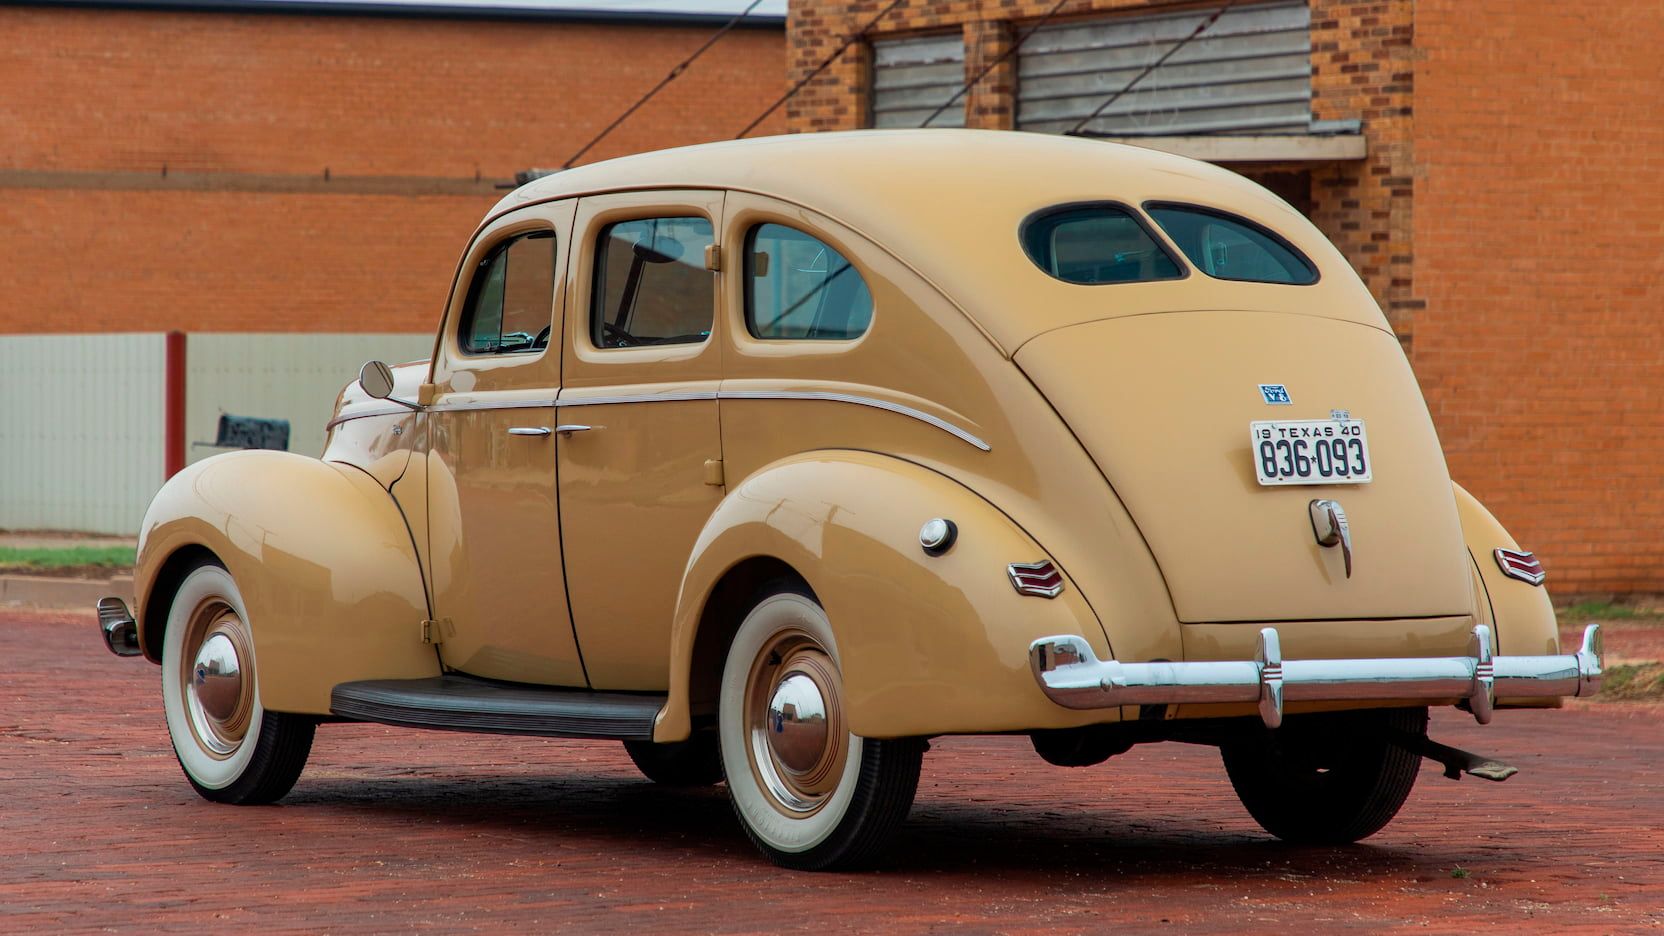 Brown 1940 Ford Standard Fordor Sedan parked